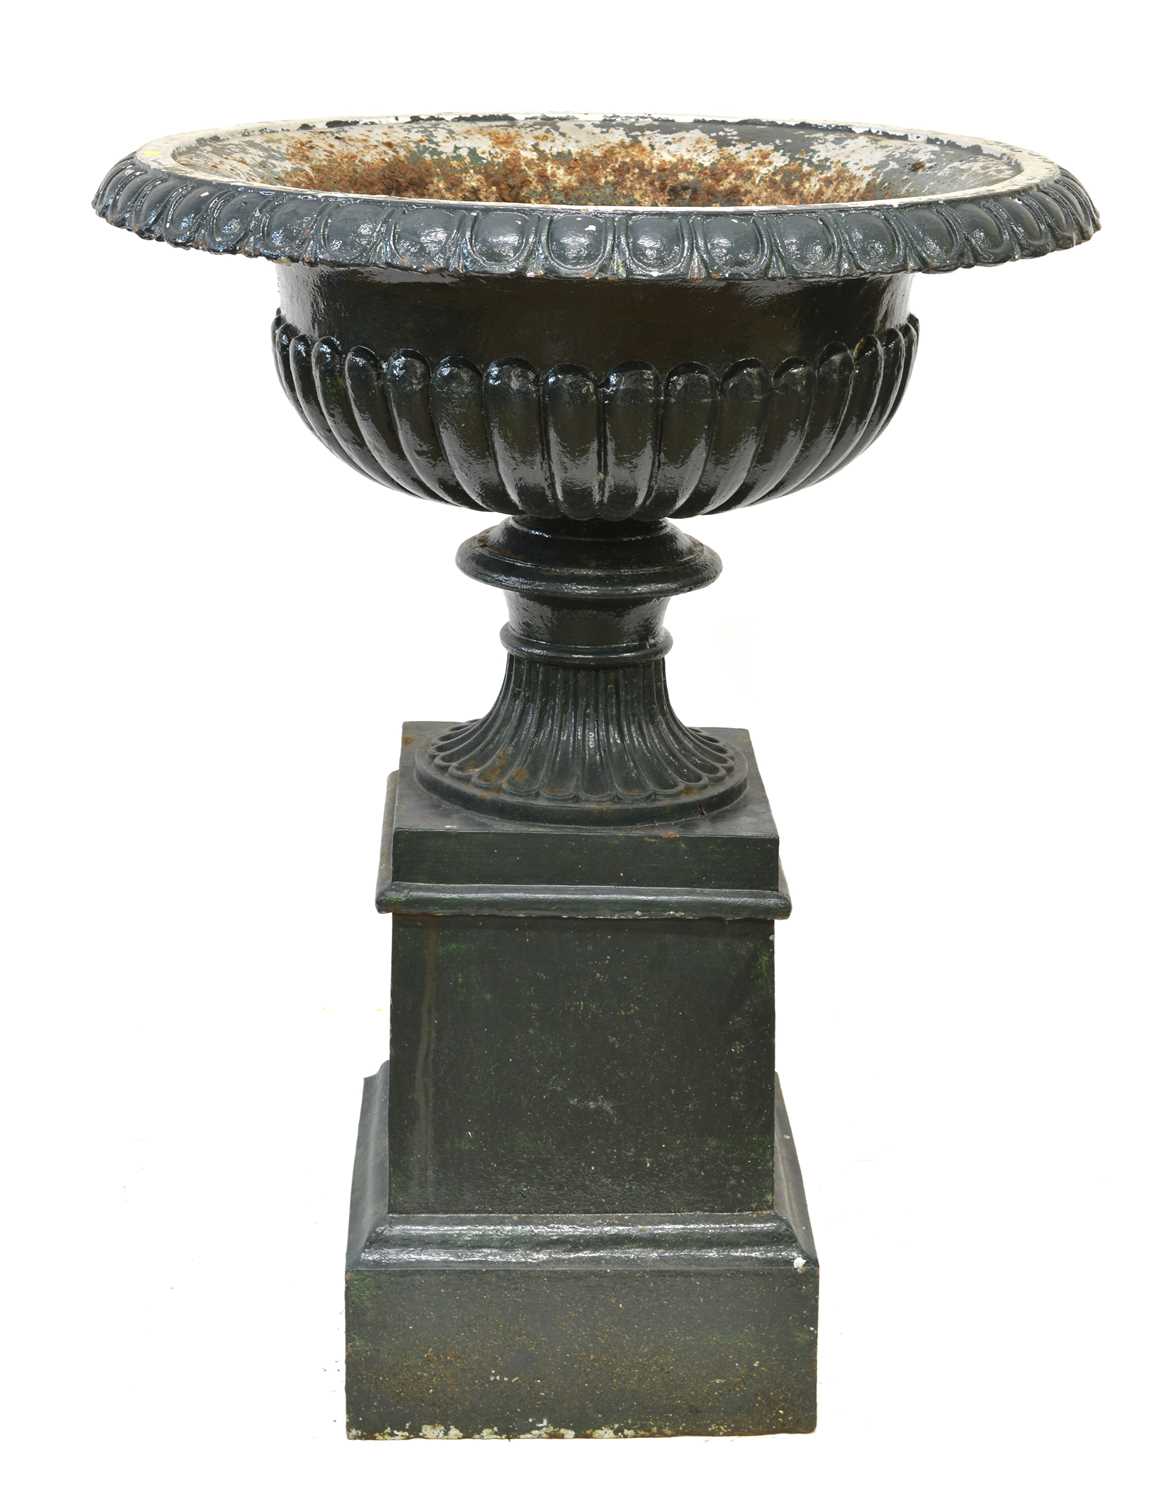 Late 19th-century cast iron garden urn